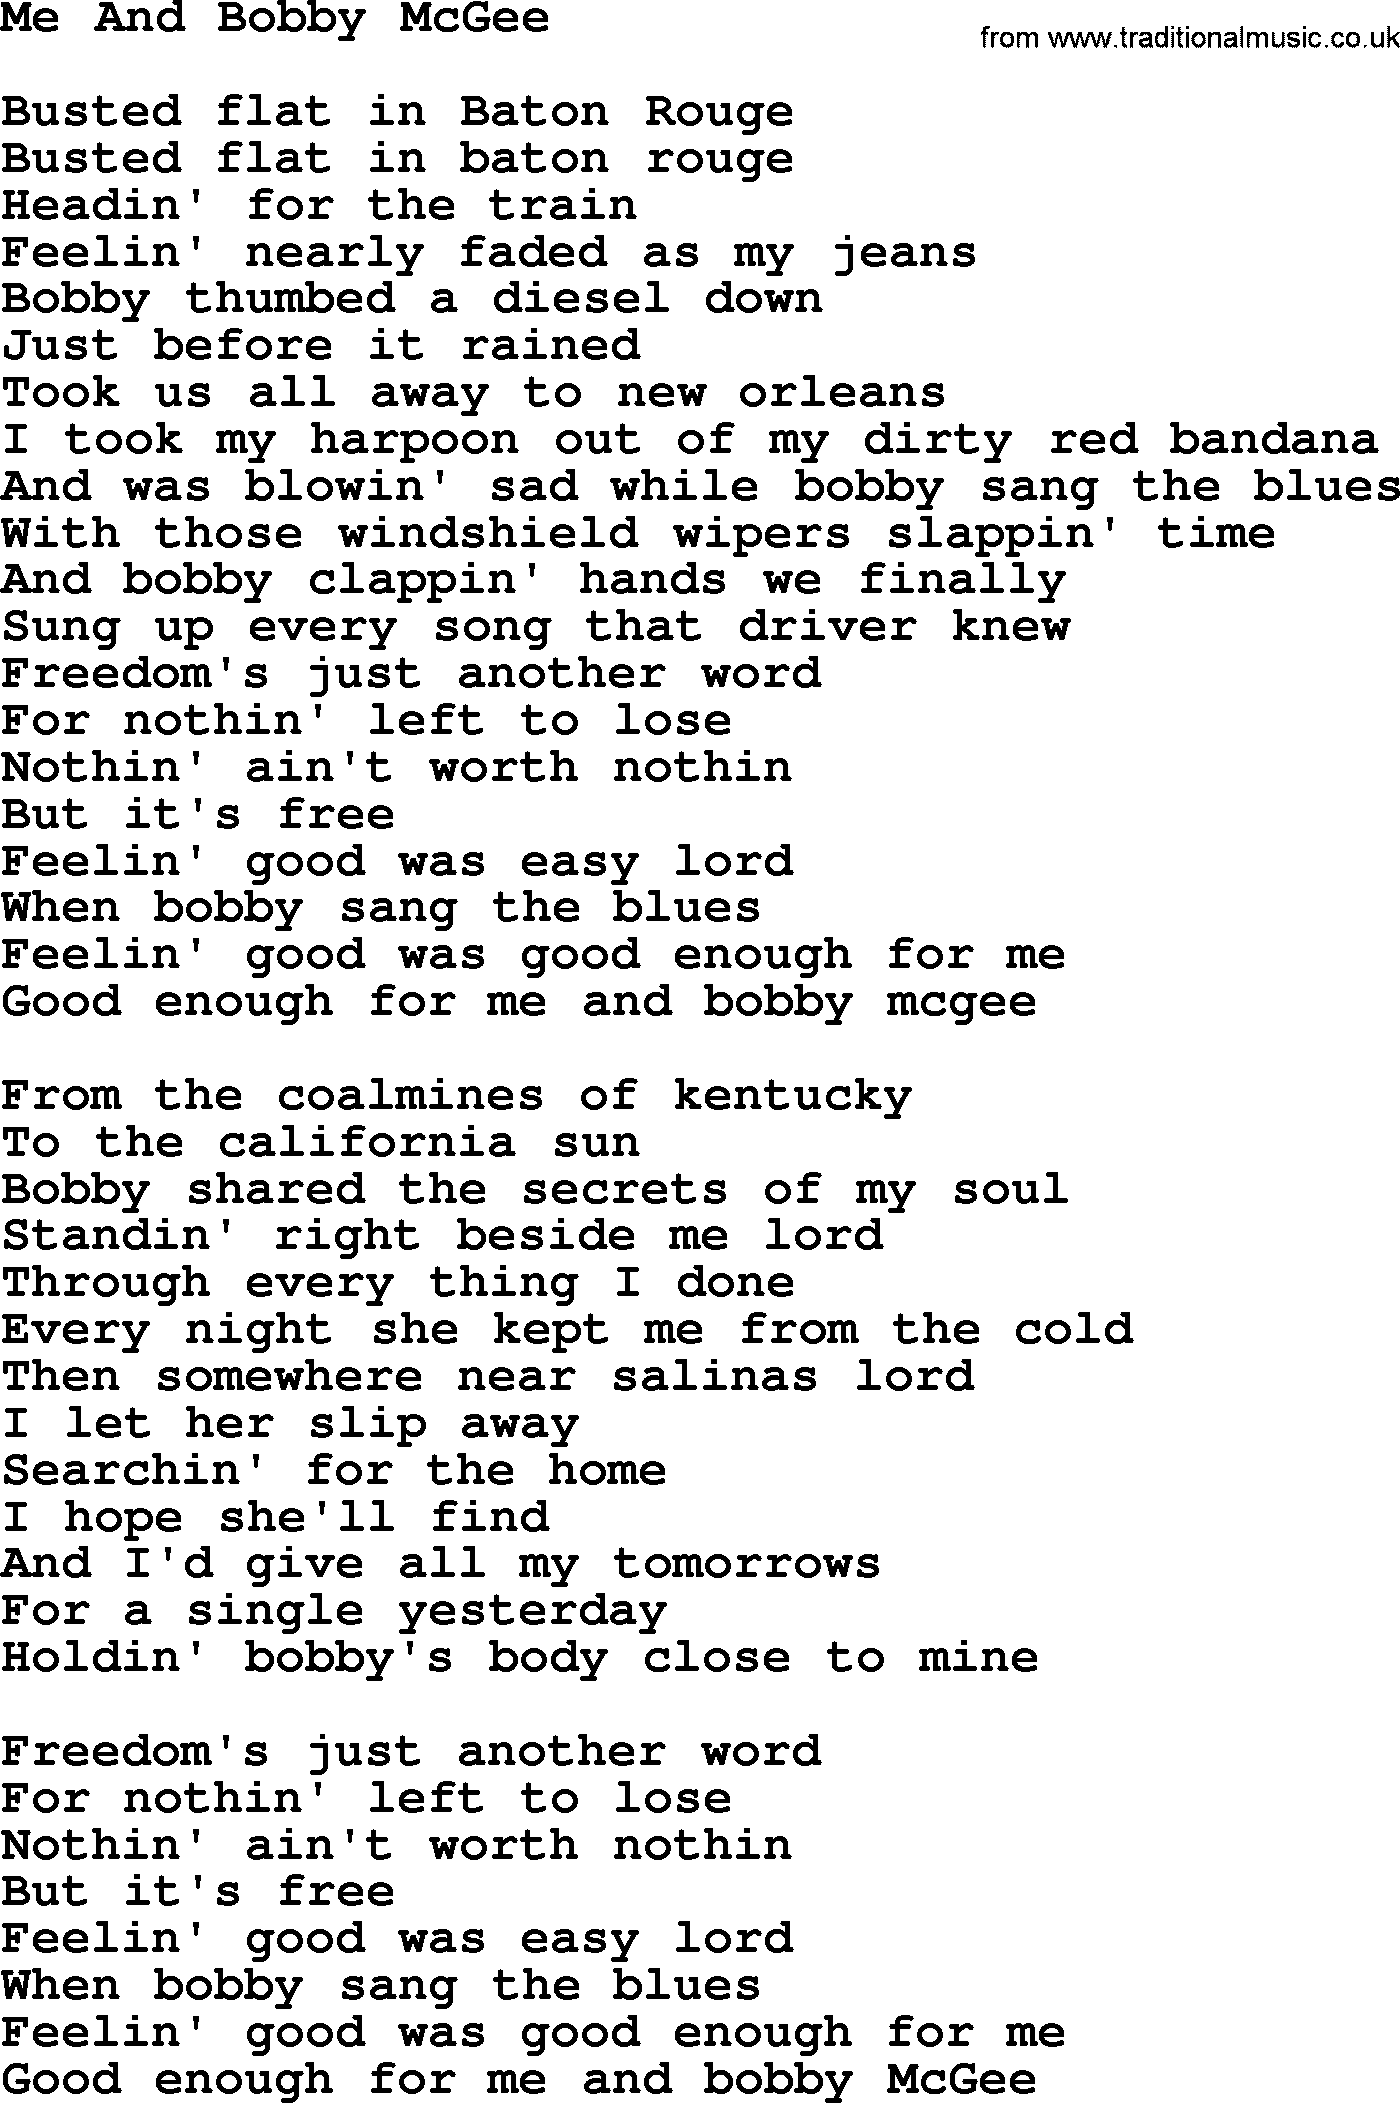 Gordon Lightfoot song Me And Bobby Mcgee, lyrics